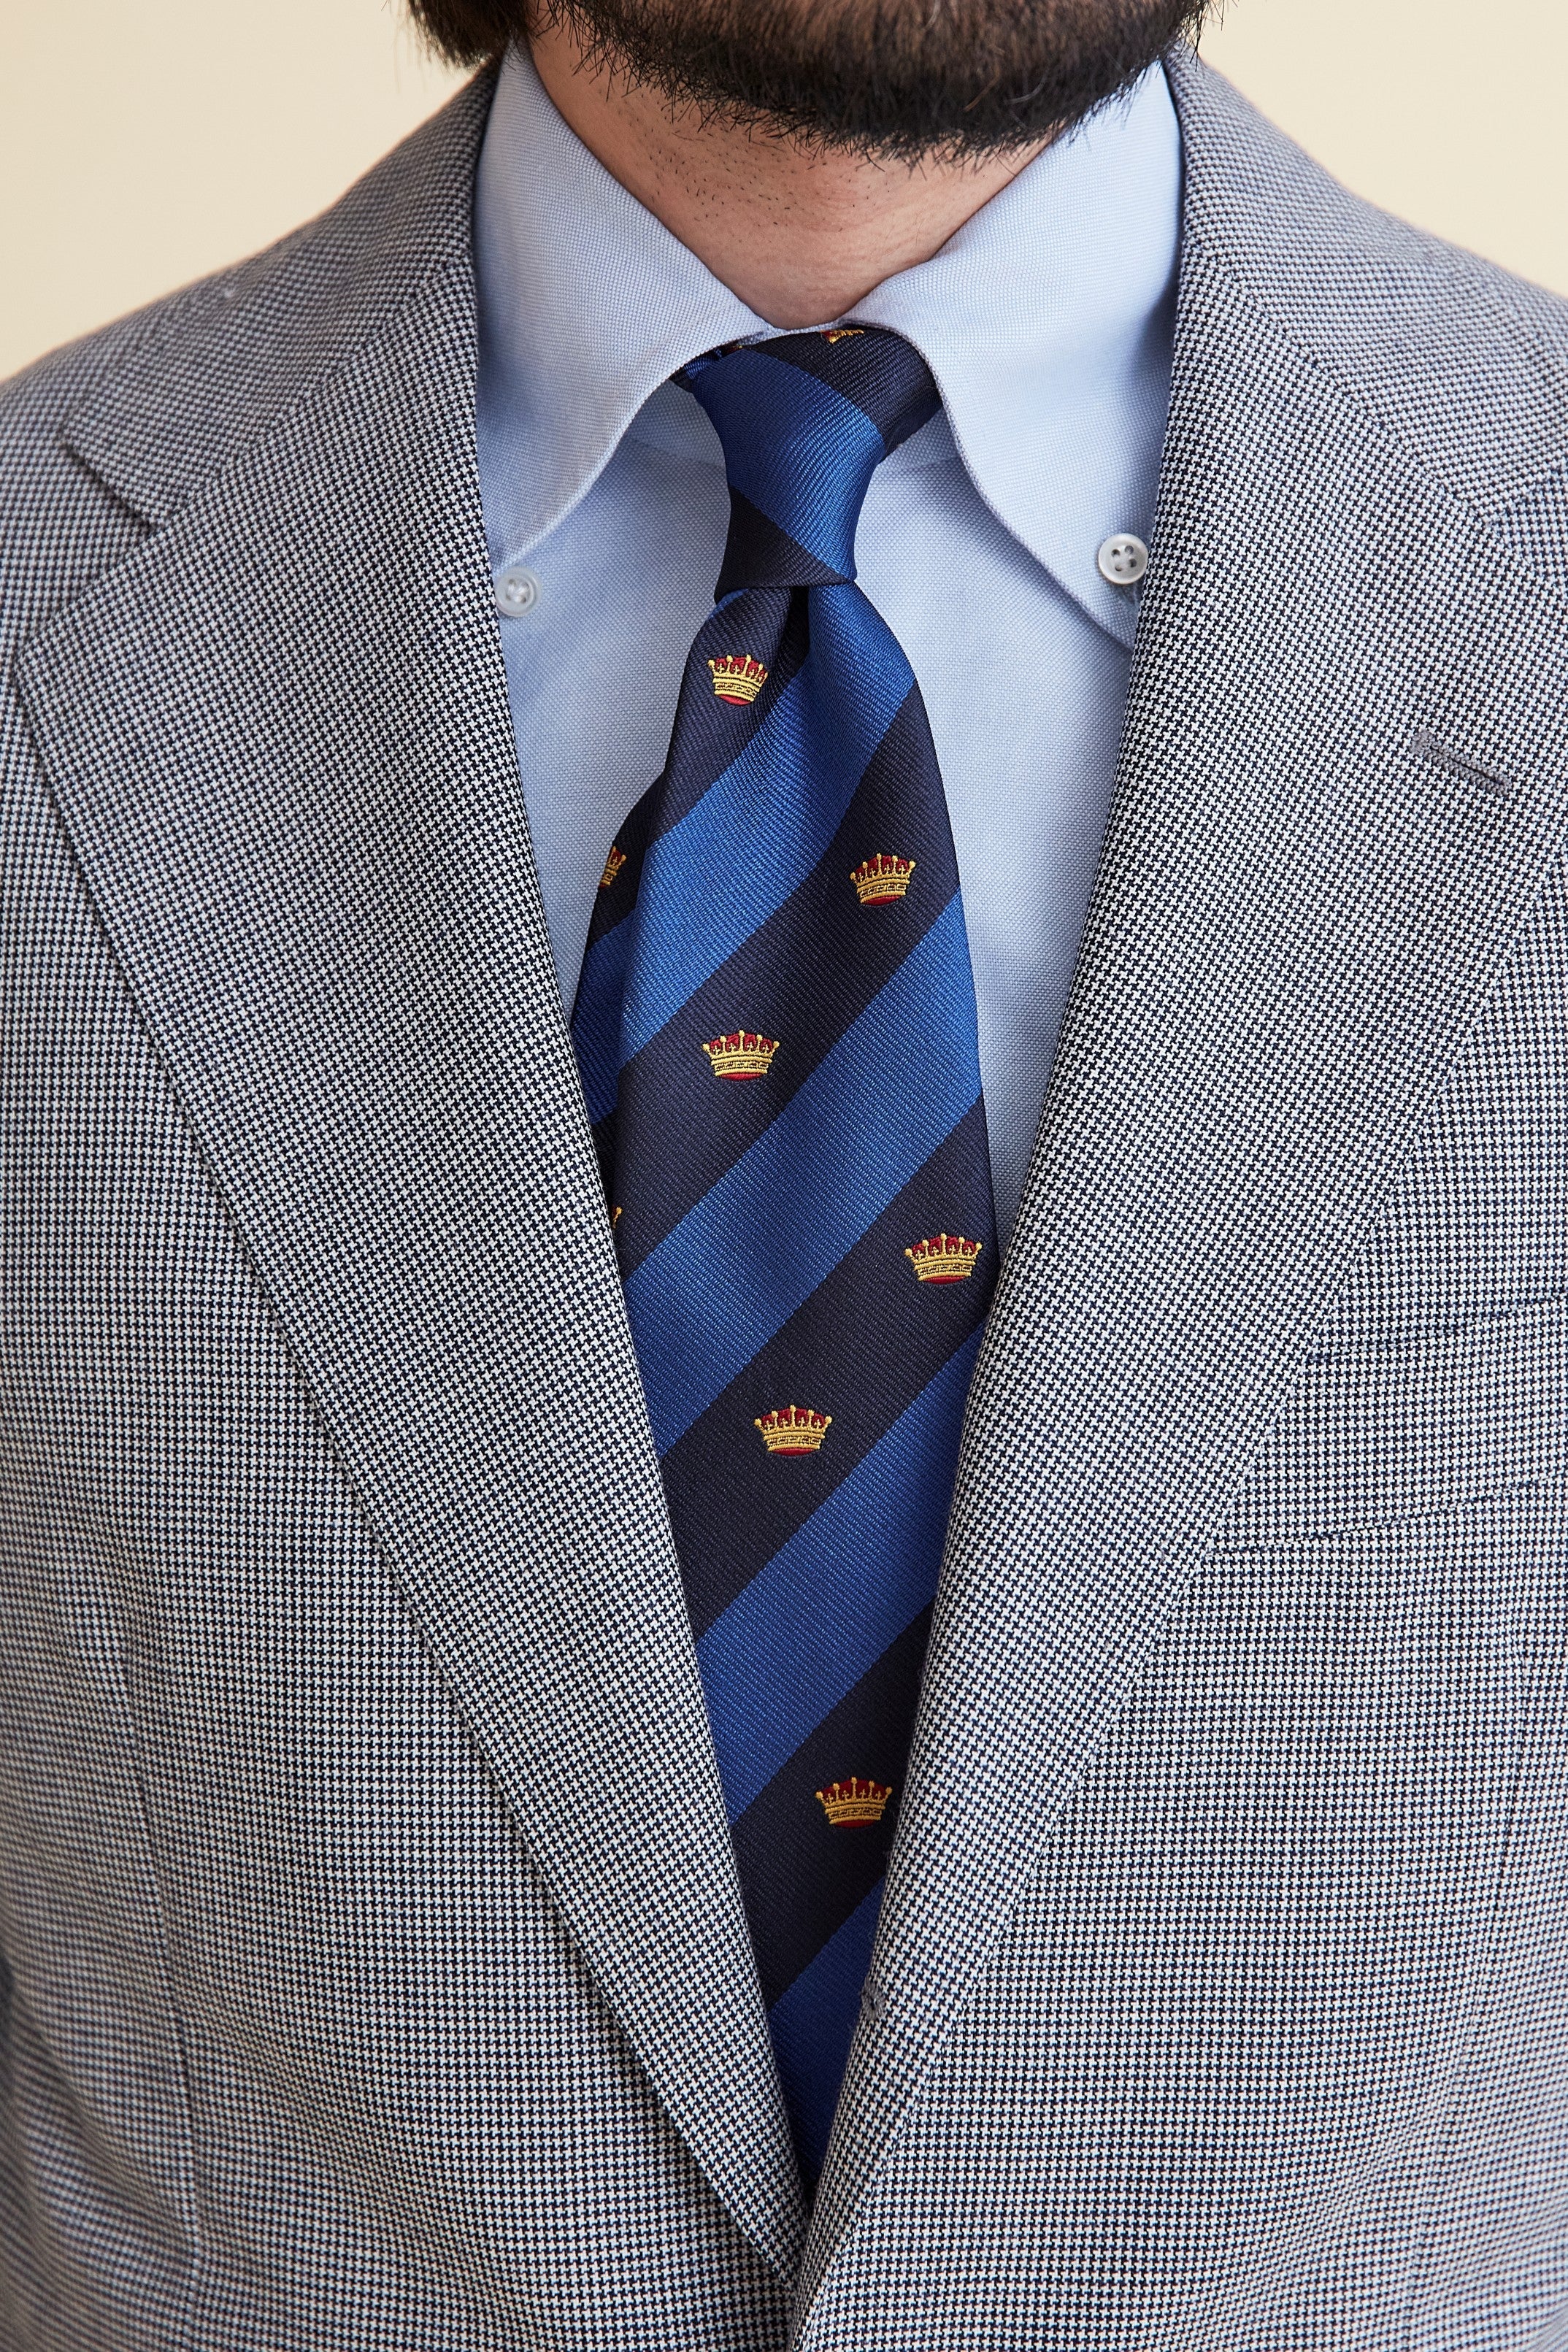 Drake's Blue and Navy Stripe Crown Silk Tie